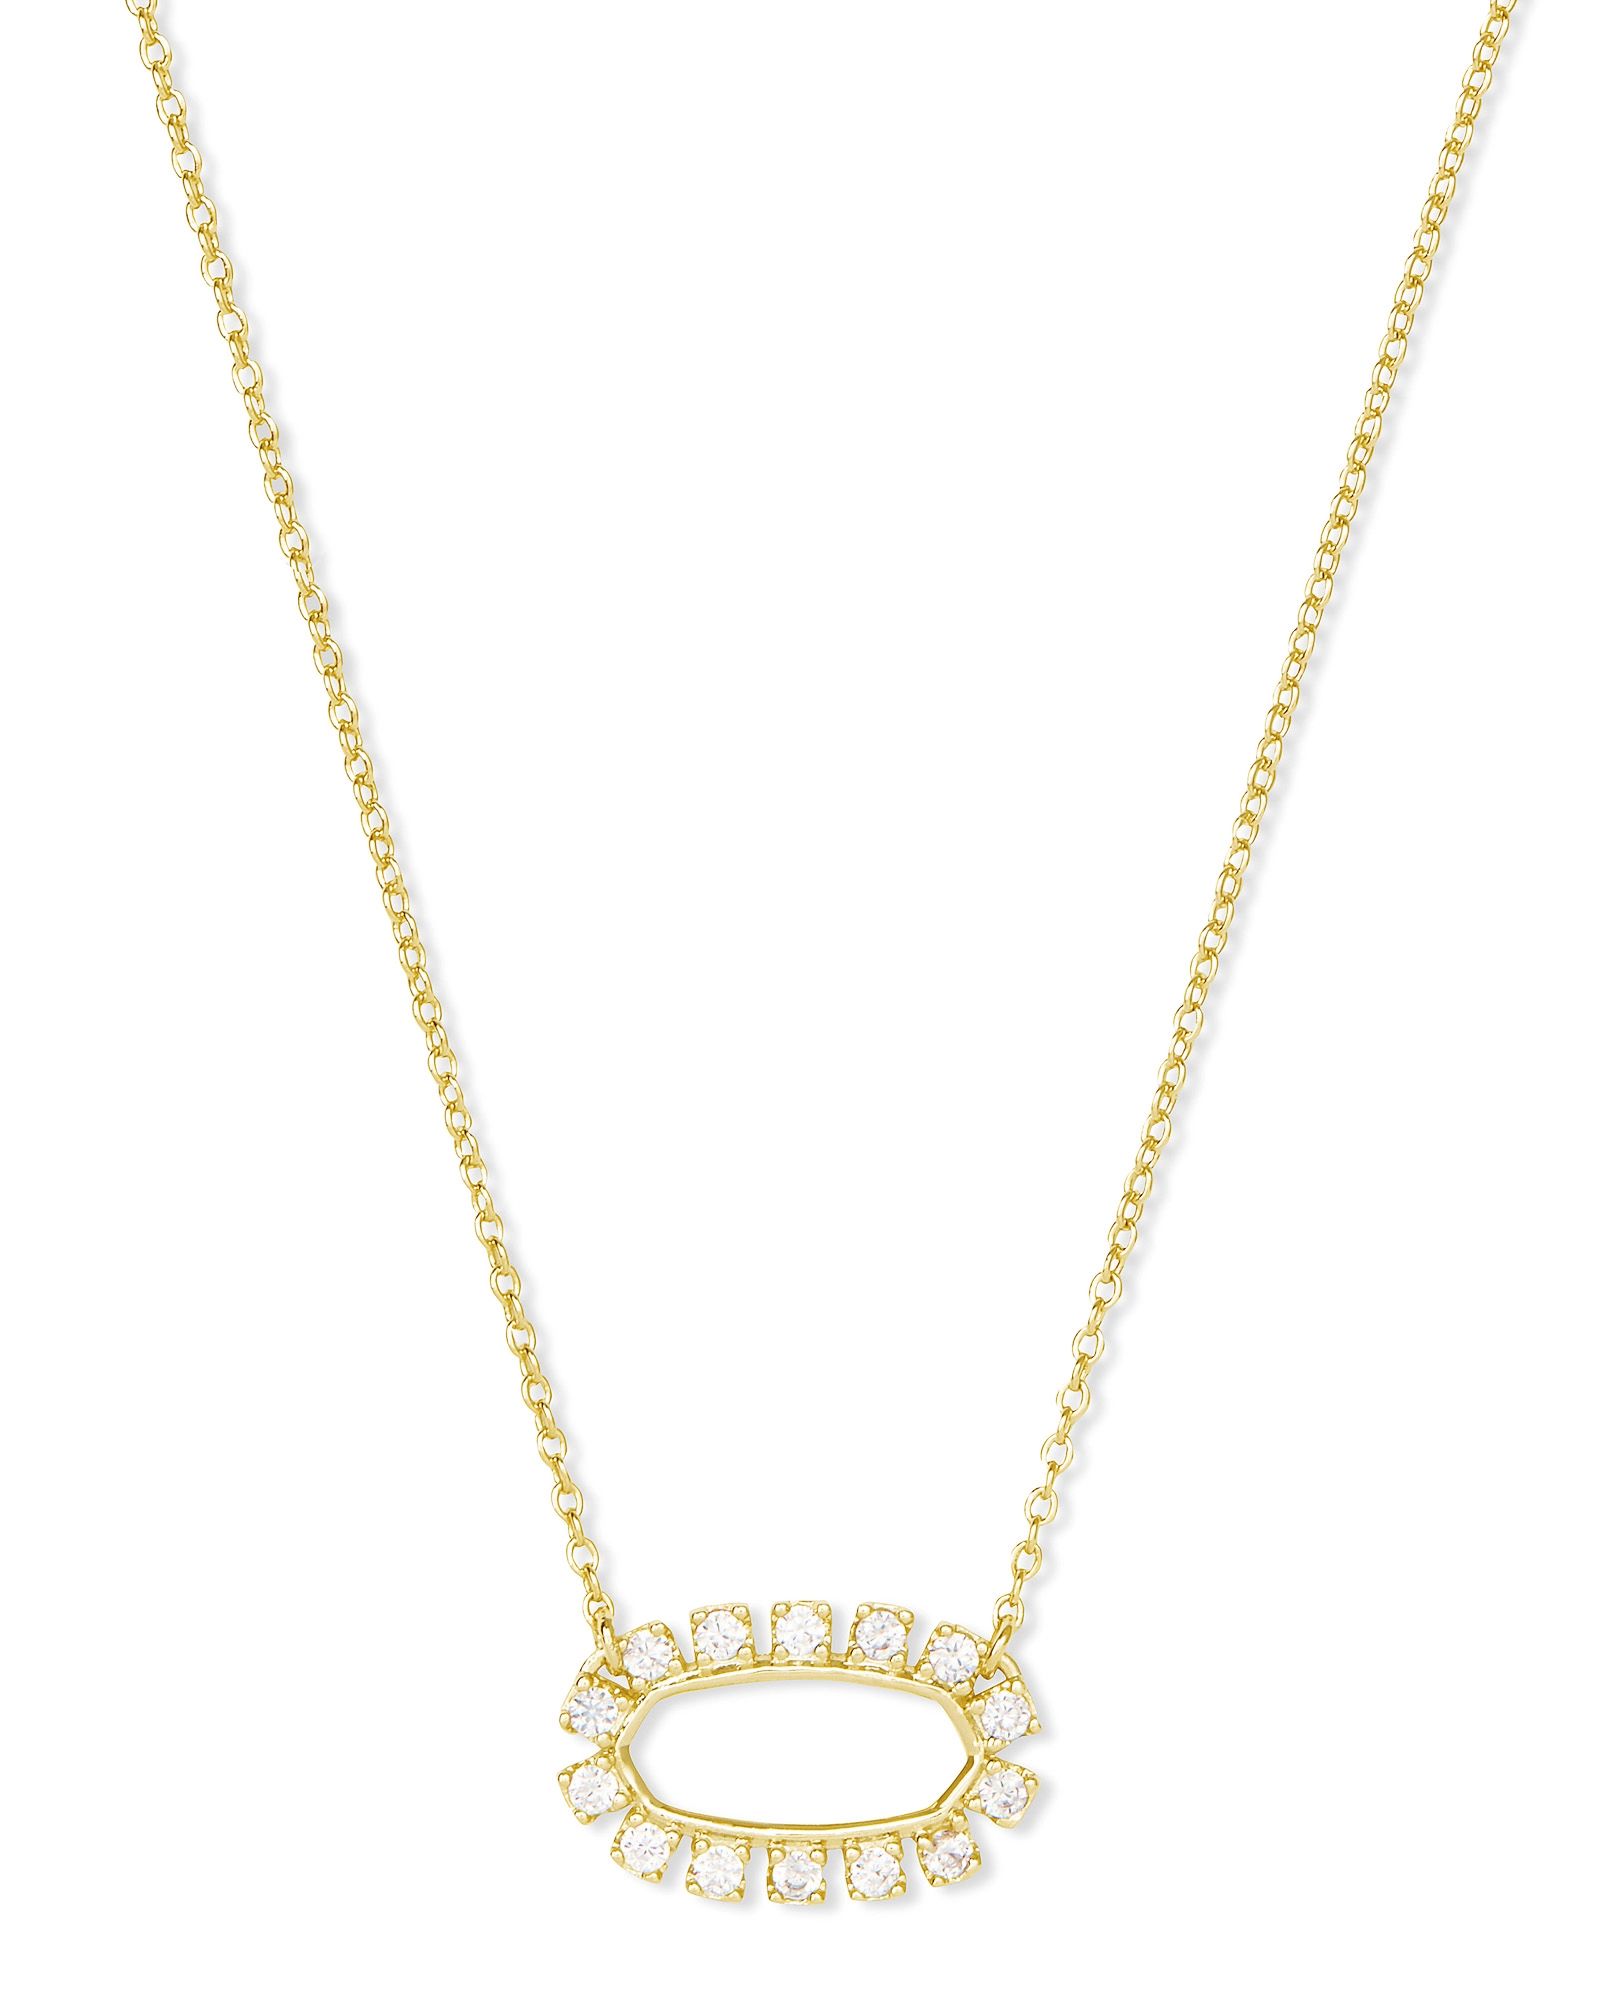 Elisa Open Frame Crystal Pendant Necklace in Gold | Kendra Scott | Kendra Scott